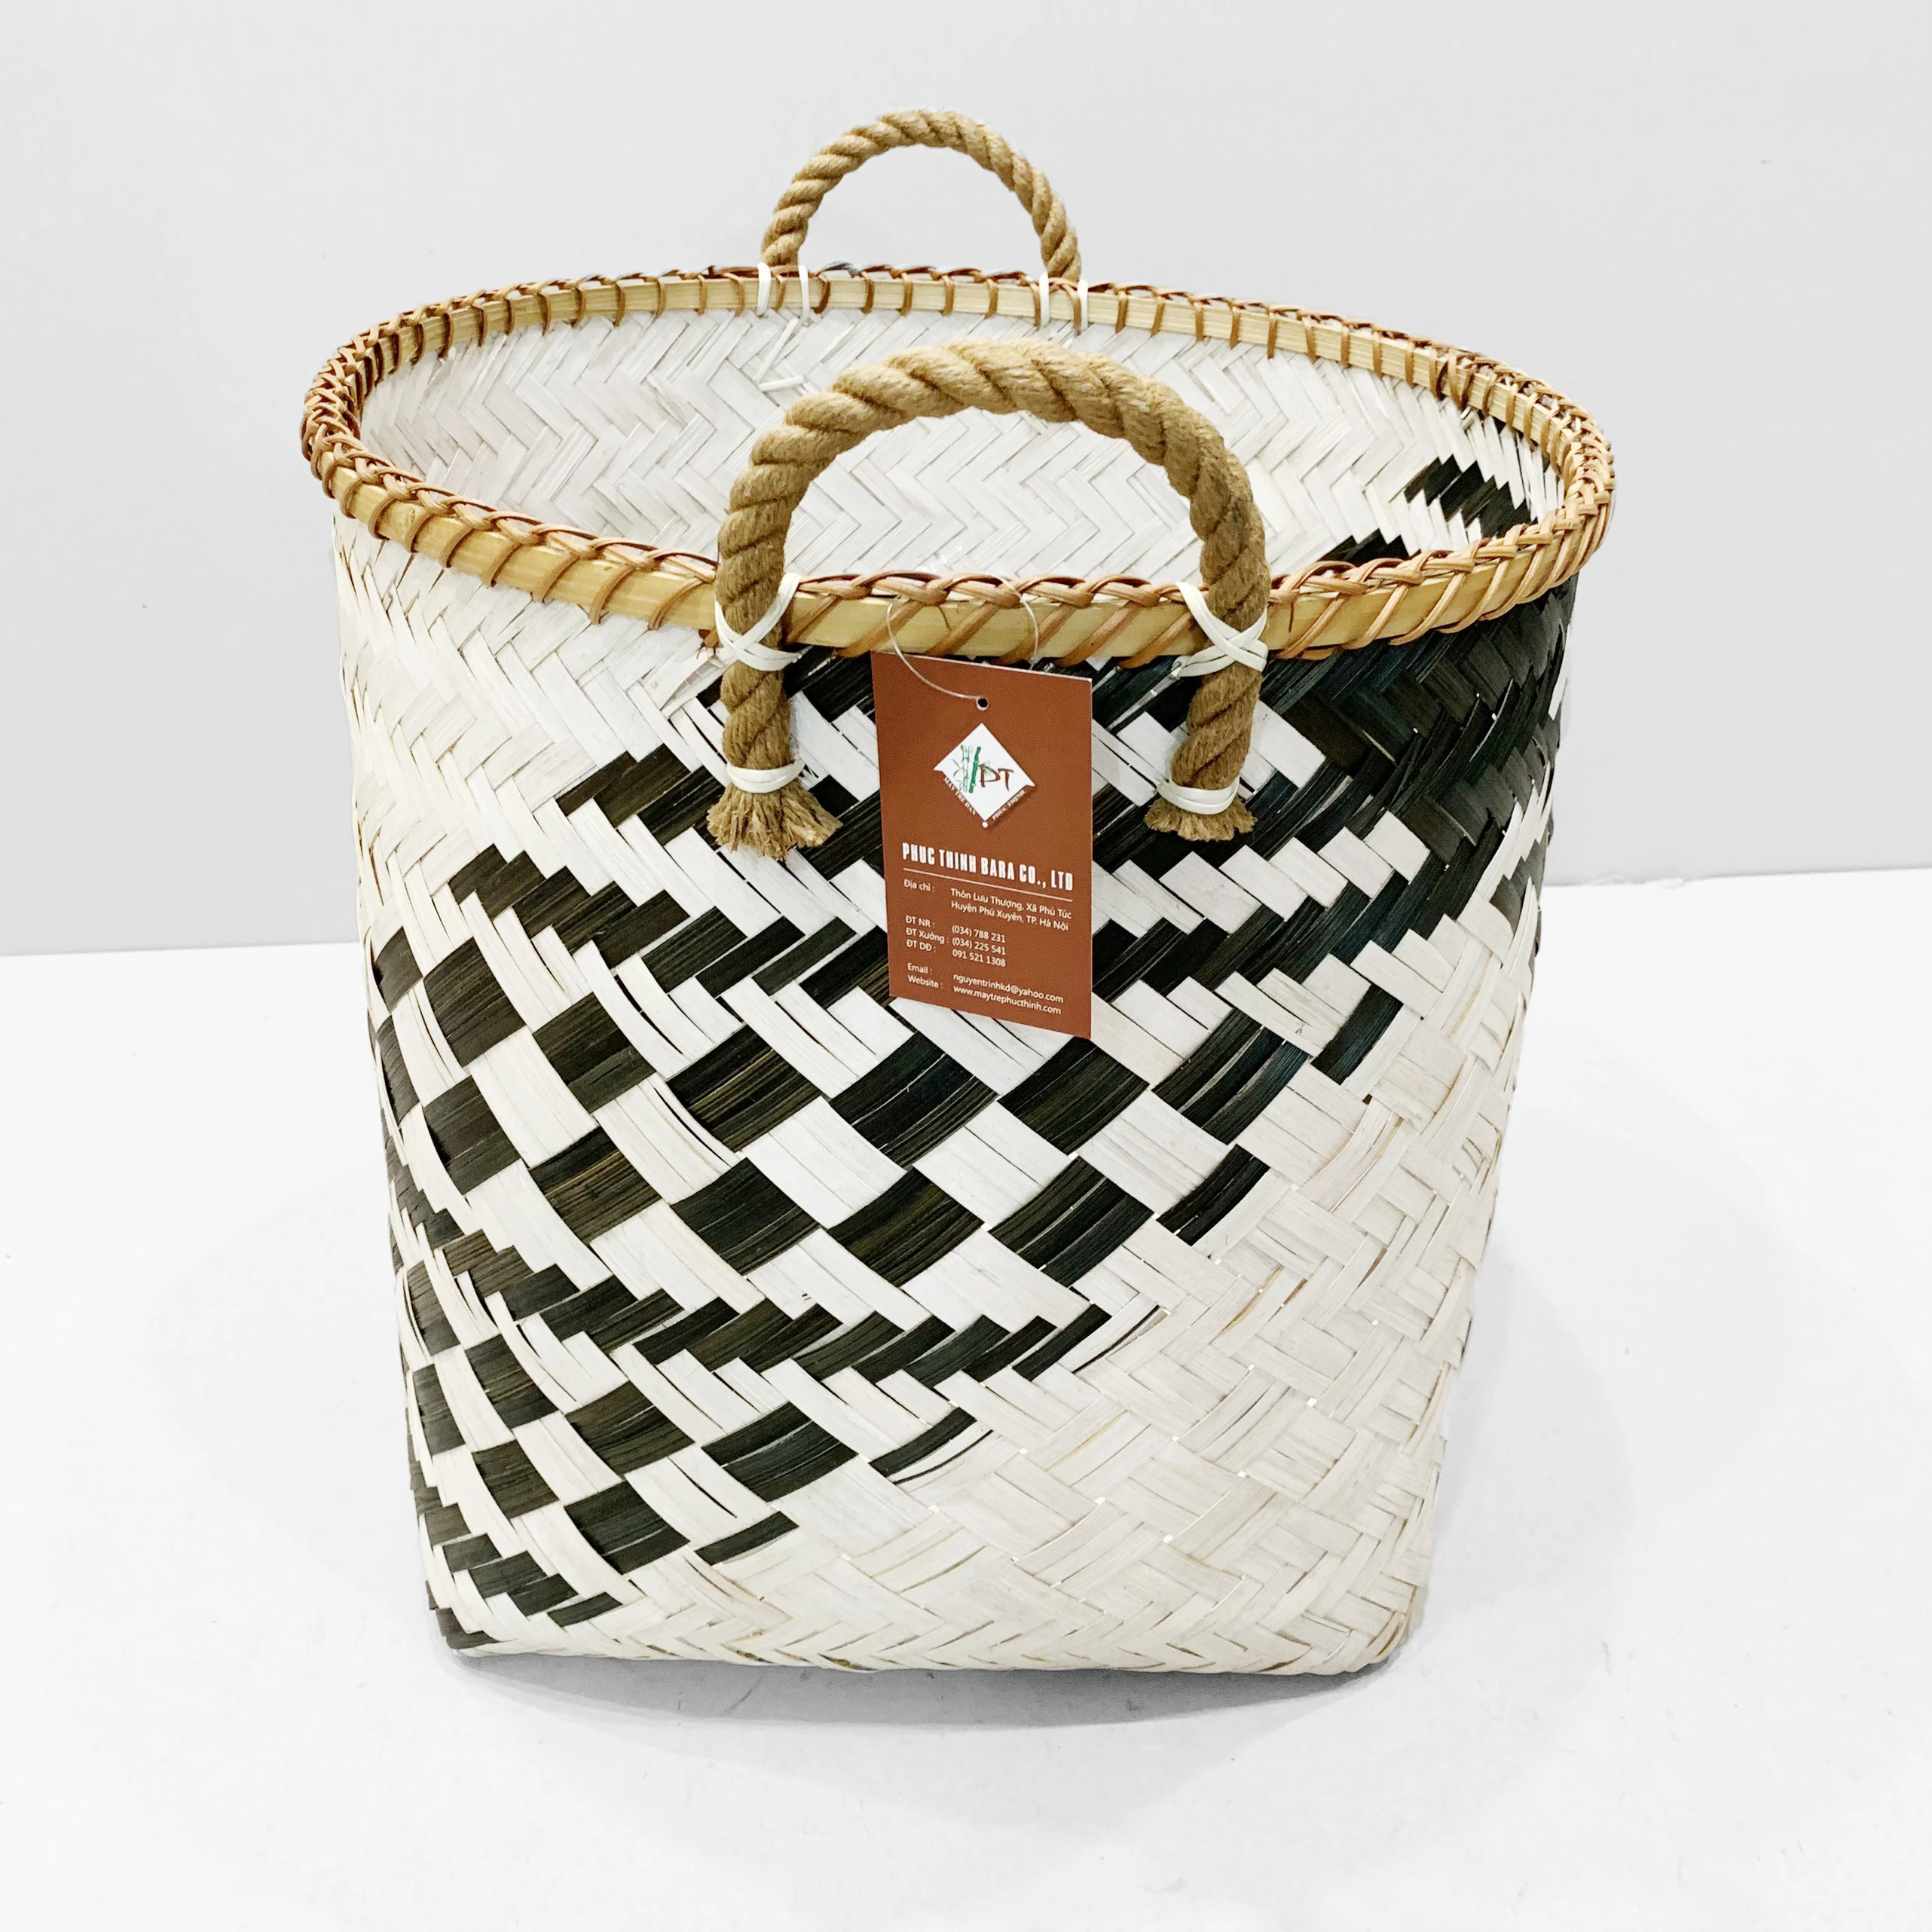 Vietnam Eco-friendly Handwoven Bamboo storage basket wicker basket with rope handle